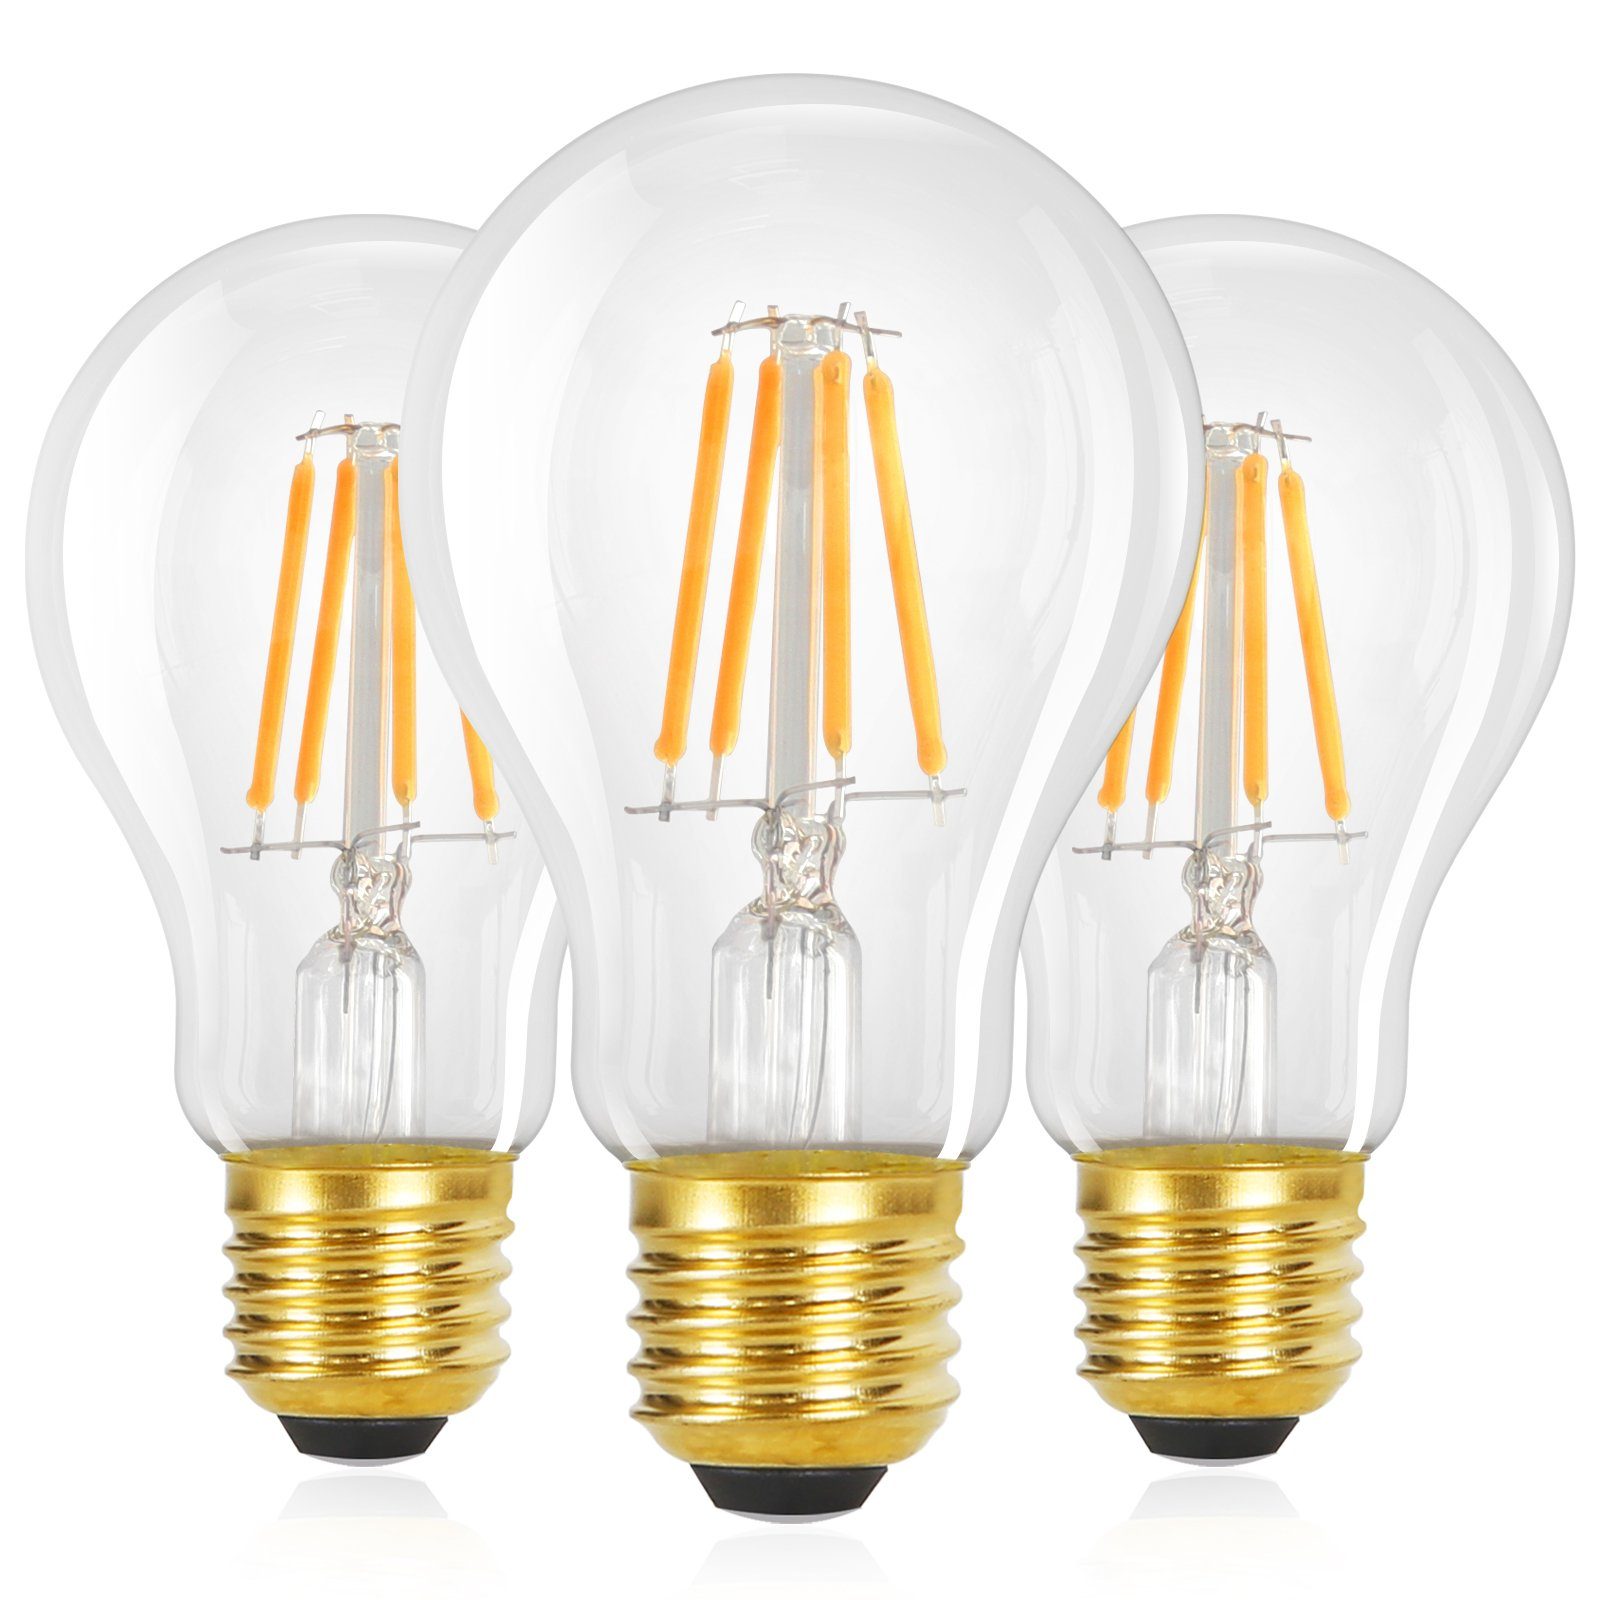 ZMH LED-Leuchtmittel E27 Glühbirne Dimmbar 3 St., Warmweiss A60 E27, Nicht Edison Vintage 2700K Glühlampe, 3000k, 4W